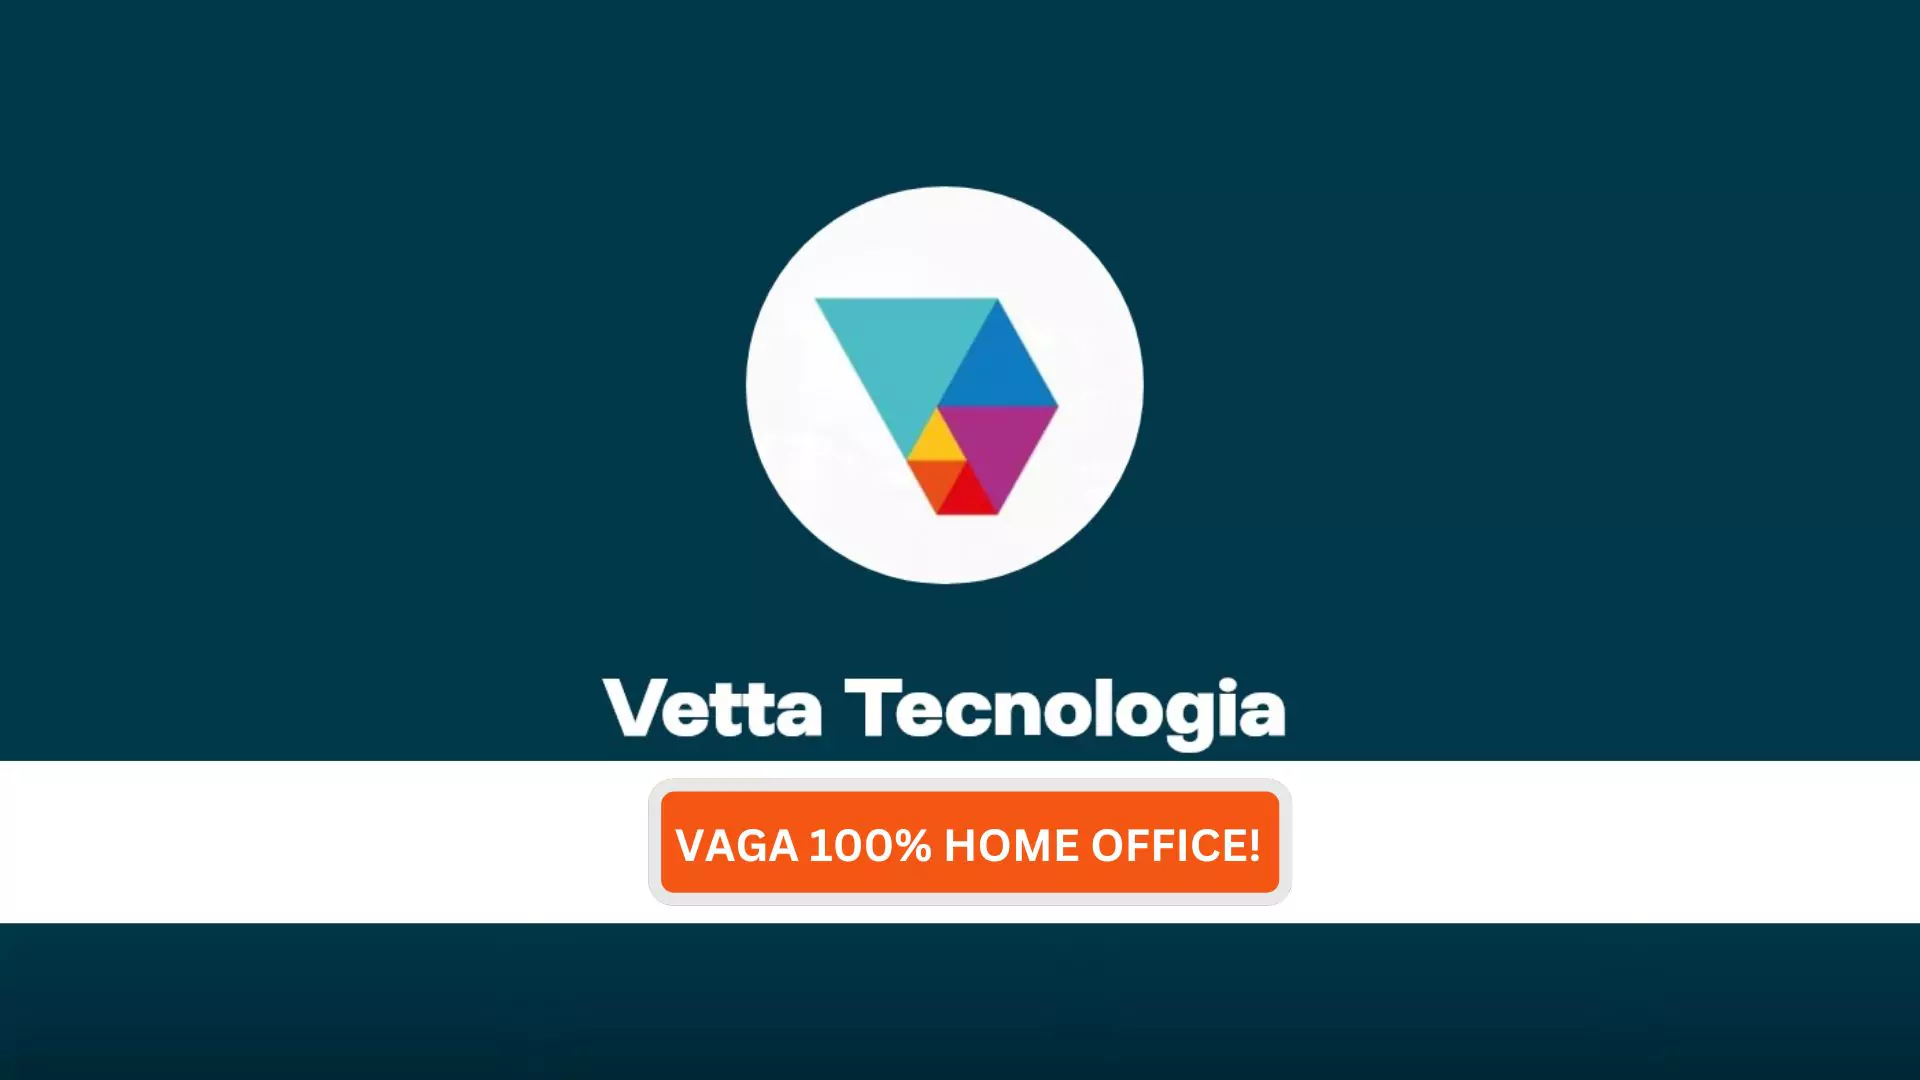 ANALISTA DE RH JR: Vaga 100% Home Office na Vetta com Auxílio Remoto, ANALISTA DE BI PLENO: Vaga 100% Home Office na Vetta